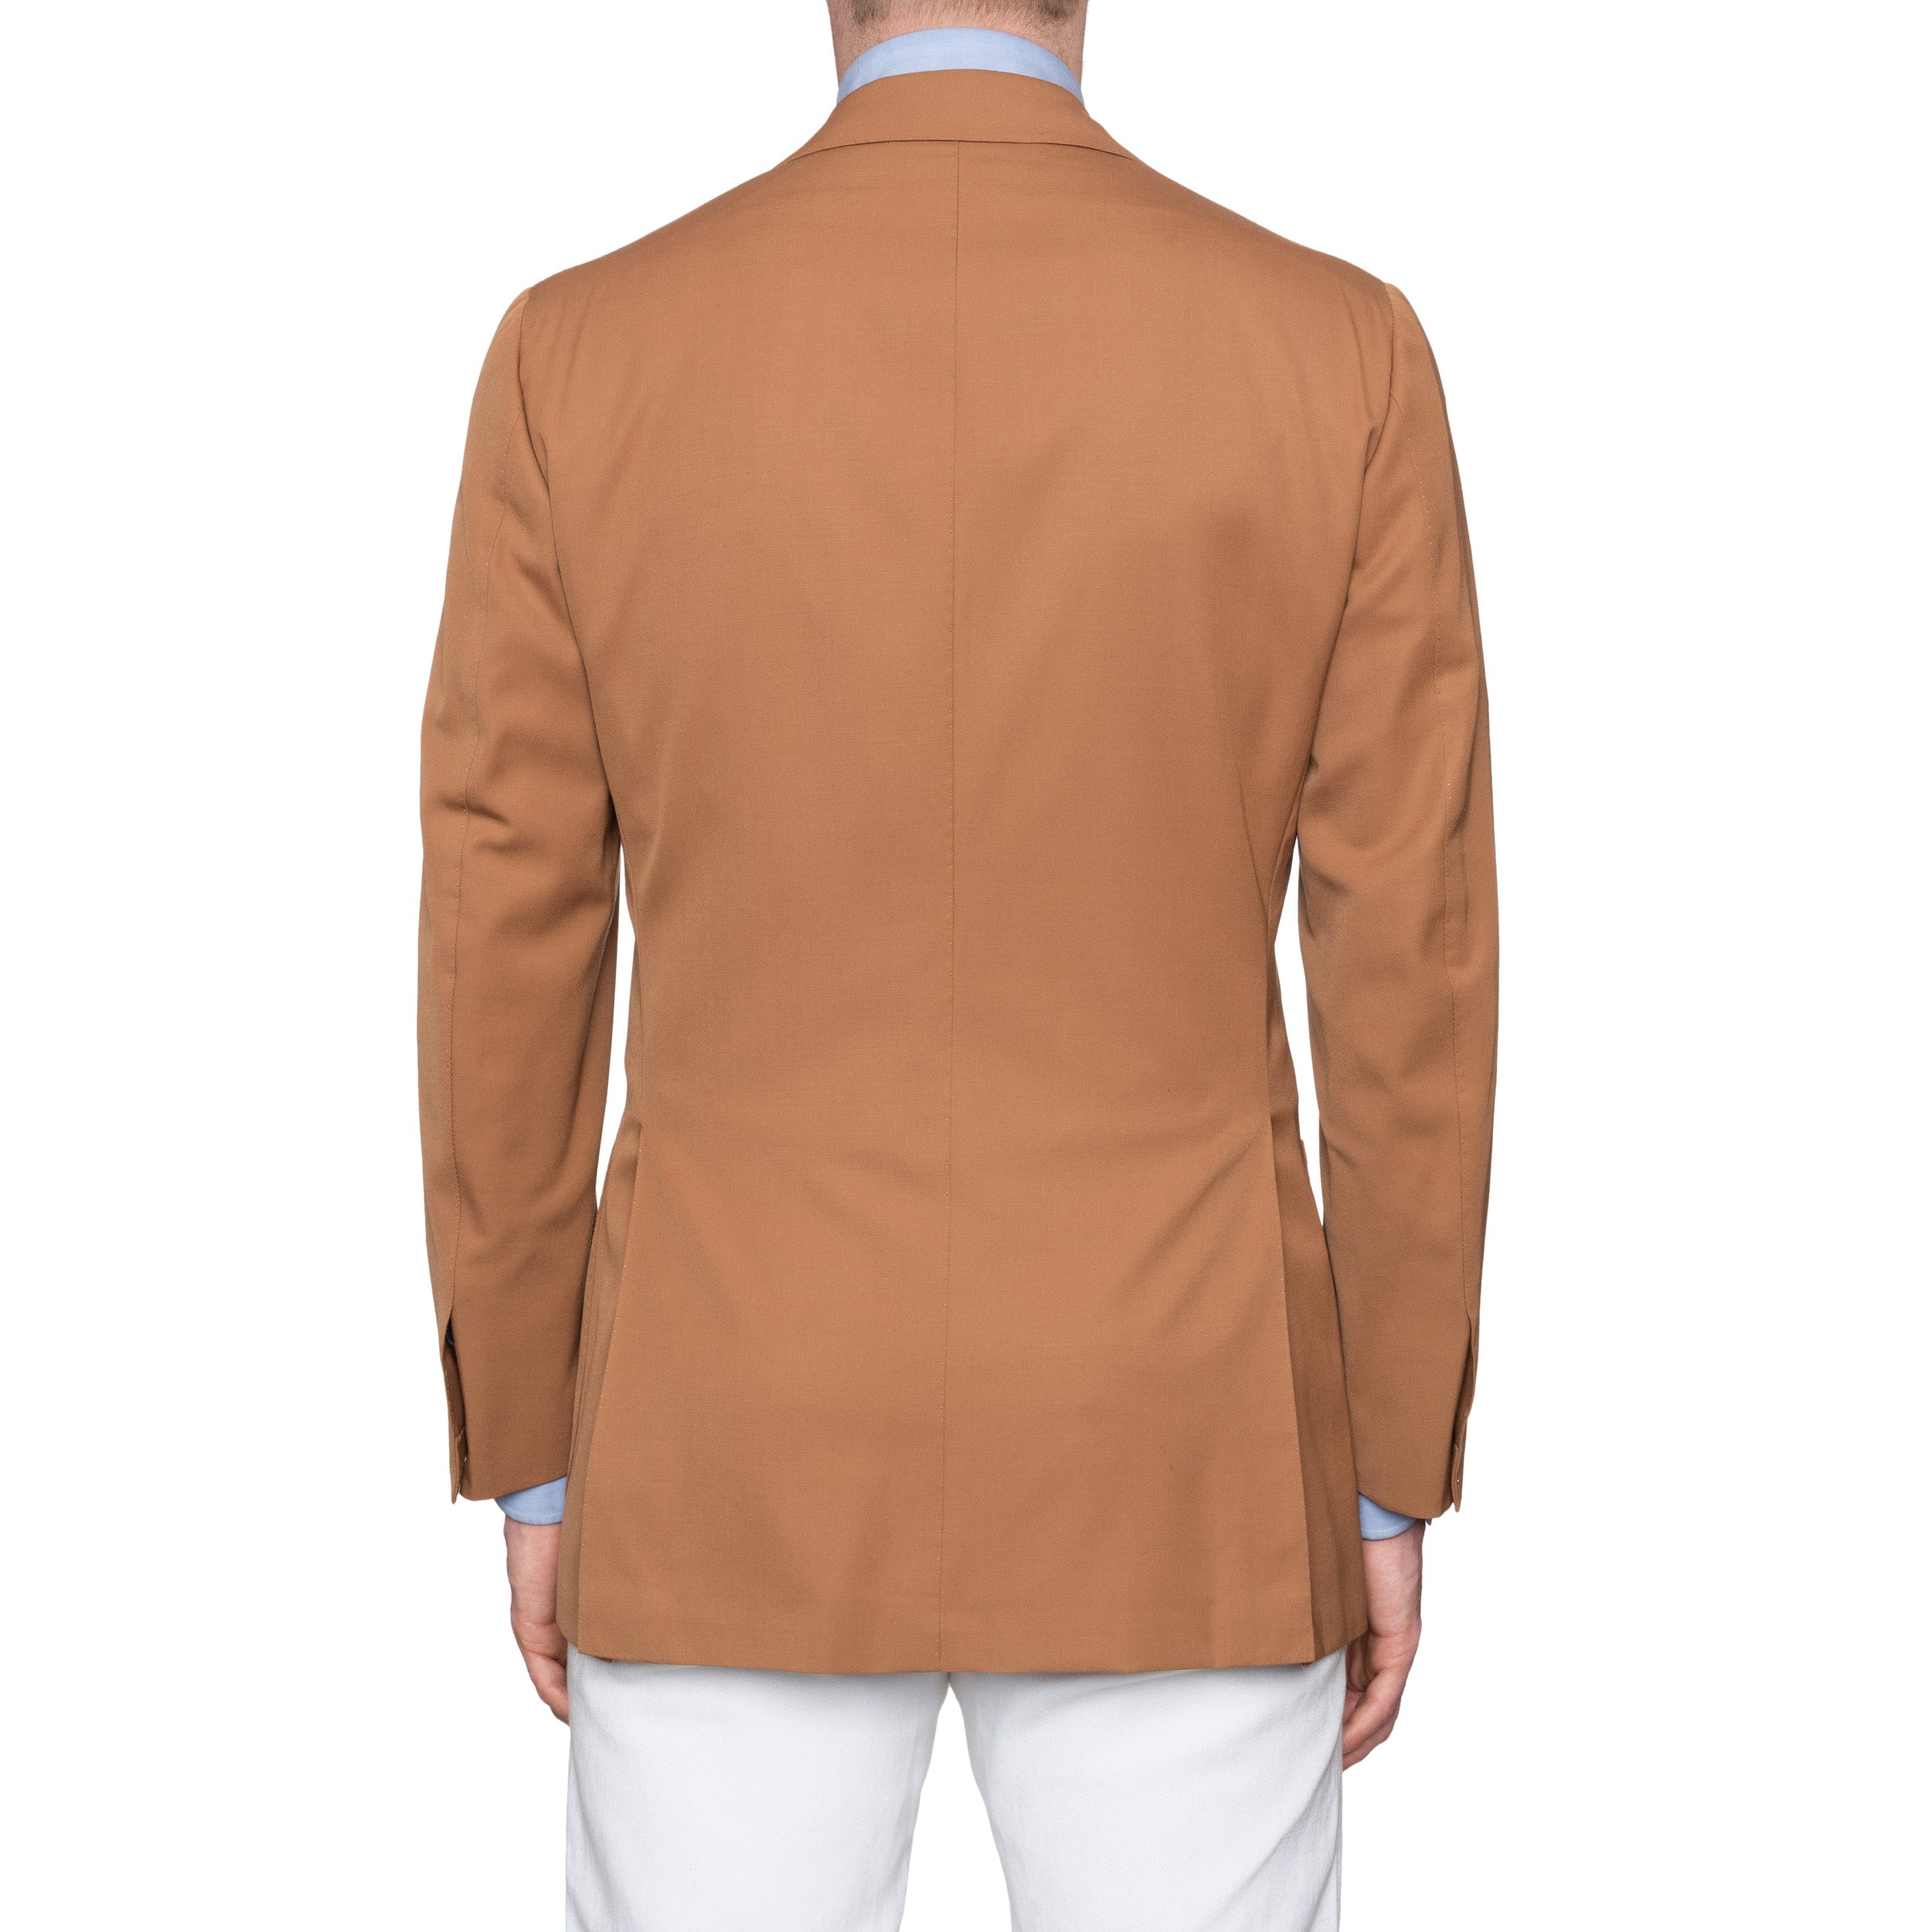 CESARE ATTOLINI Napoli Caramel Wool Super 150's Blazer Jacket NEW CESARE ATTOLINI